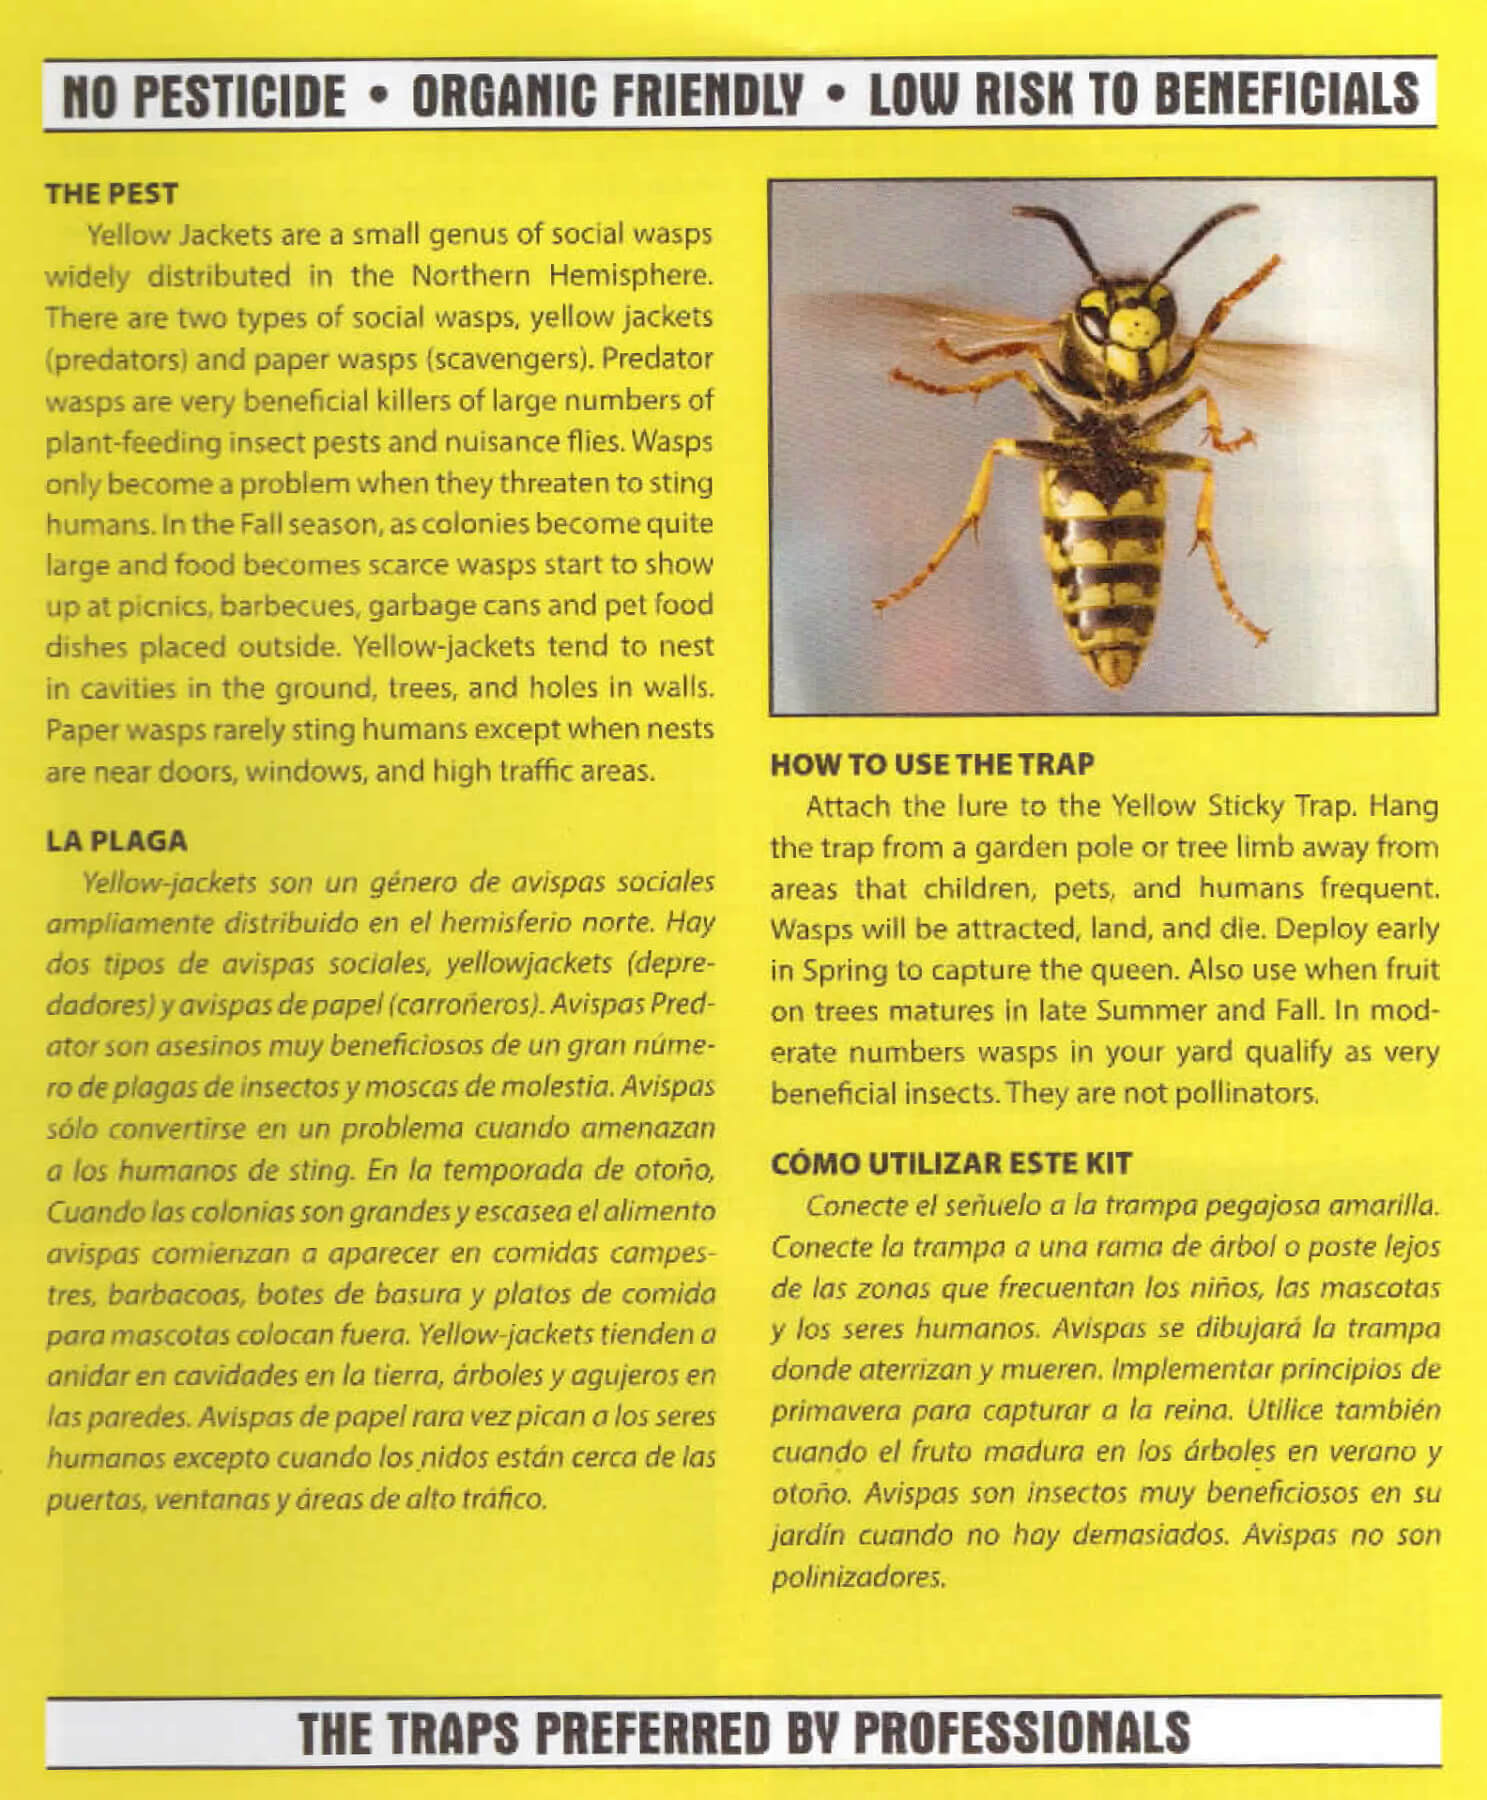 Pest Wizard Yellow Jacket & Wasp Trap Kit - 2 Pack – GardeningZone